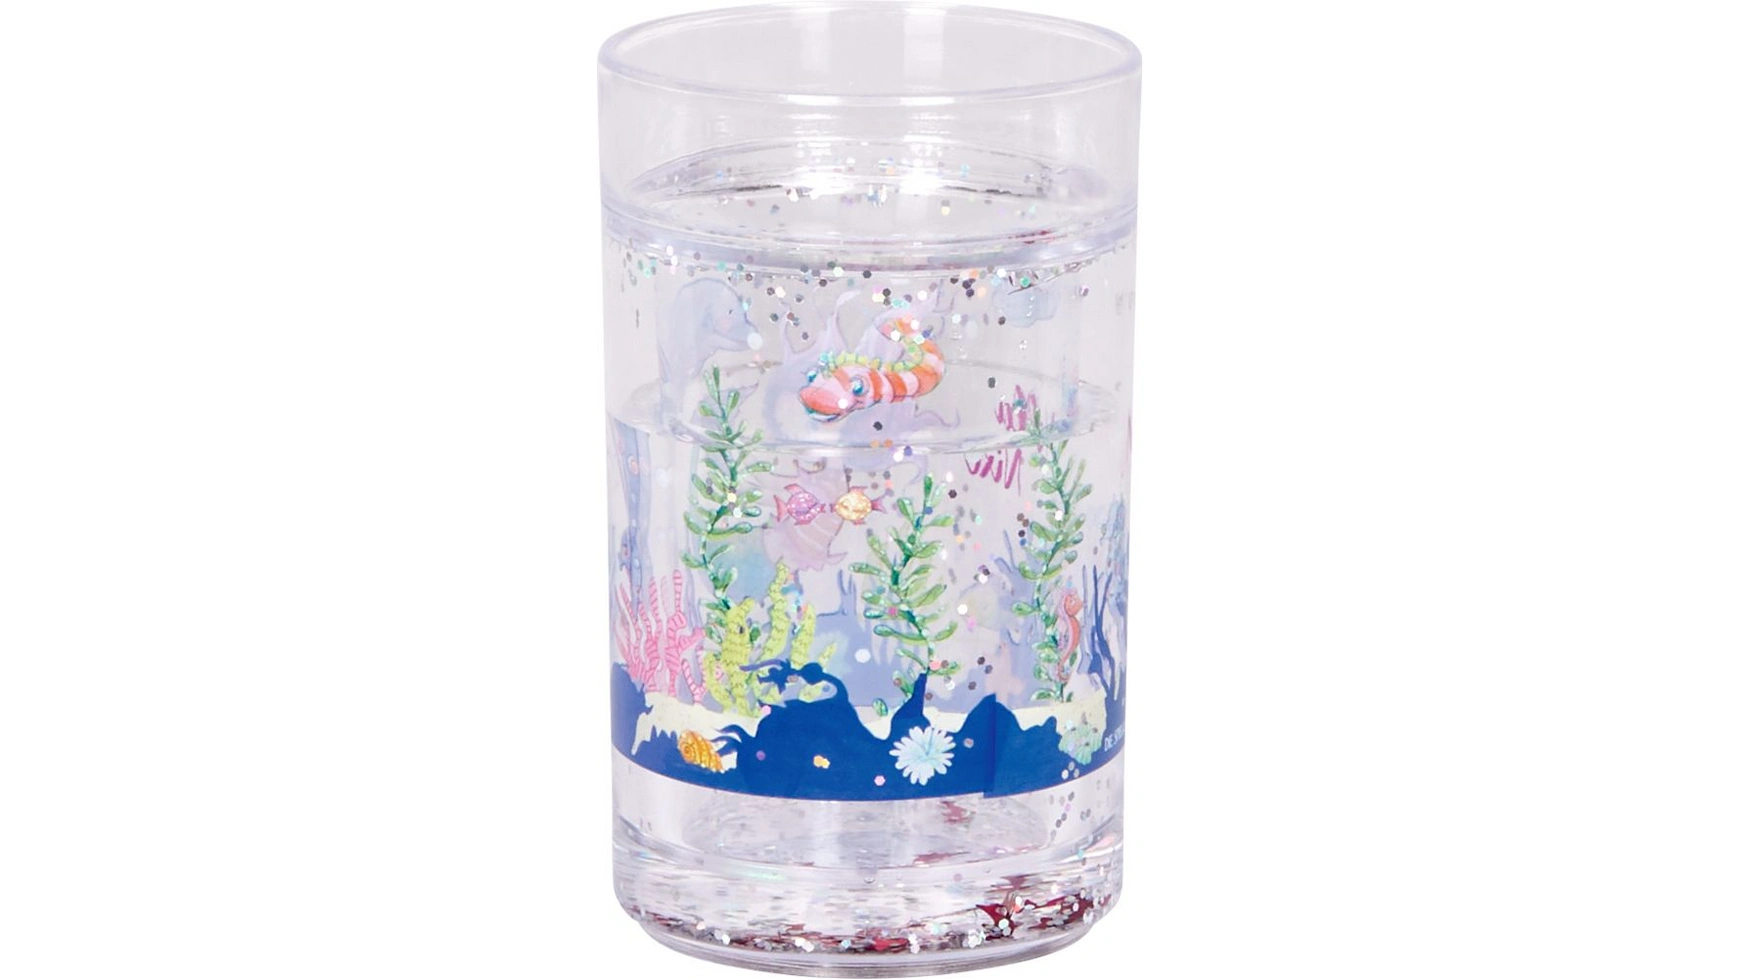 The Spiegelburg чашка с блестками и плавающими элементами Nella Nixe